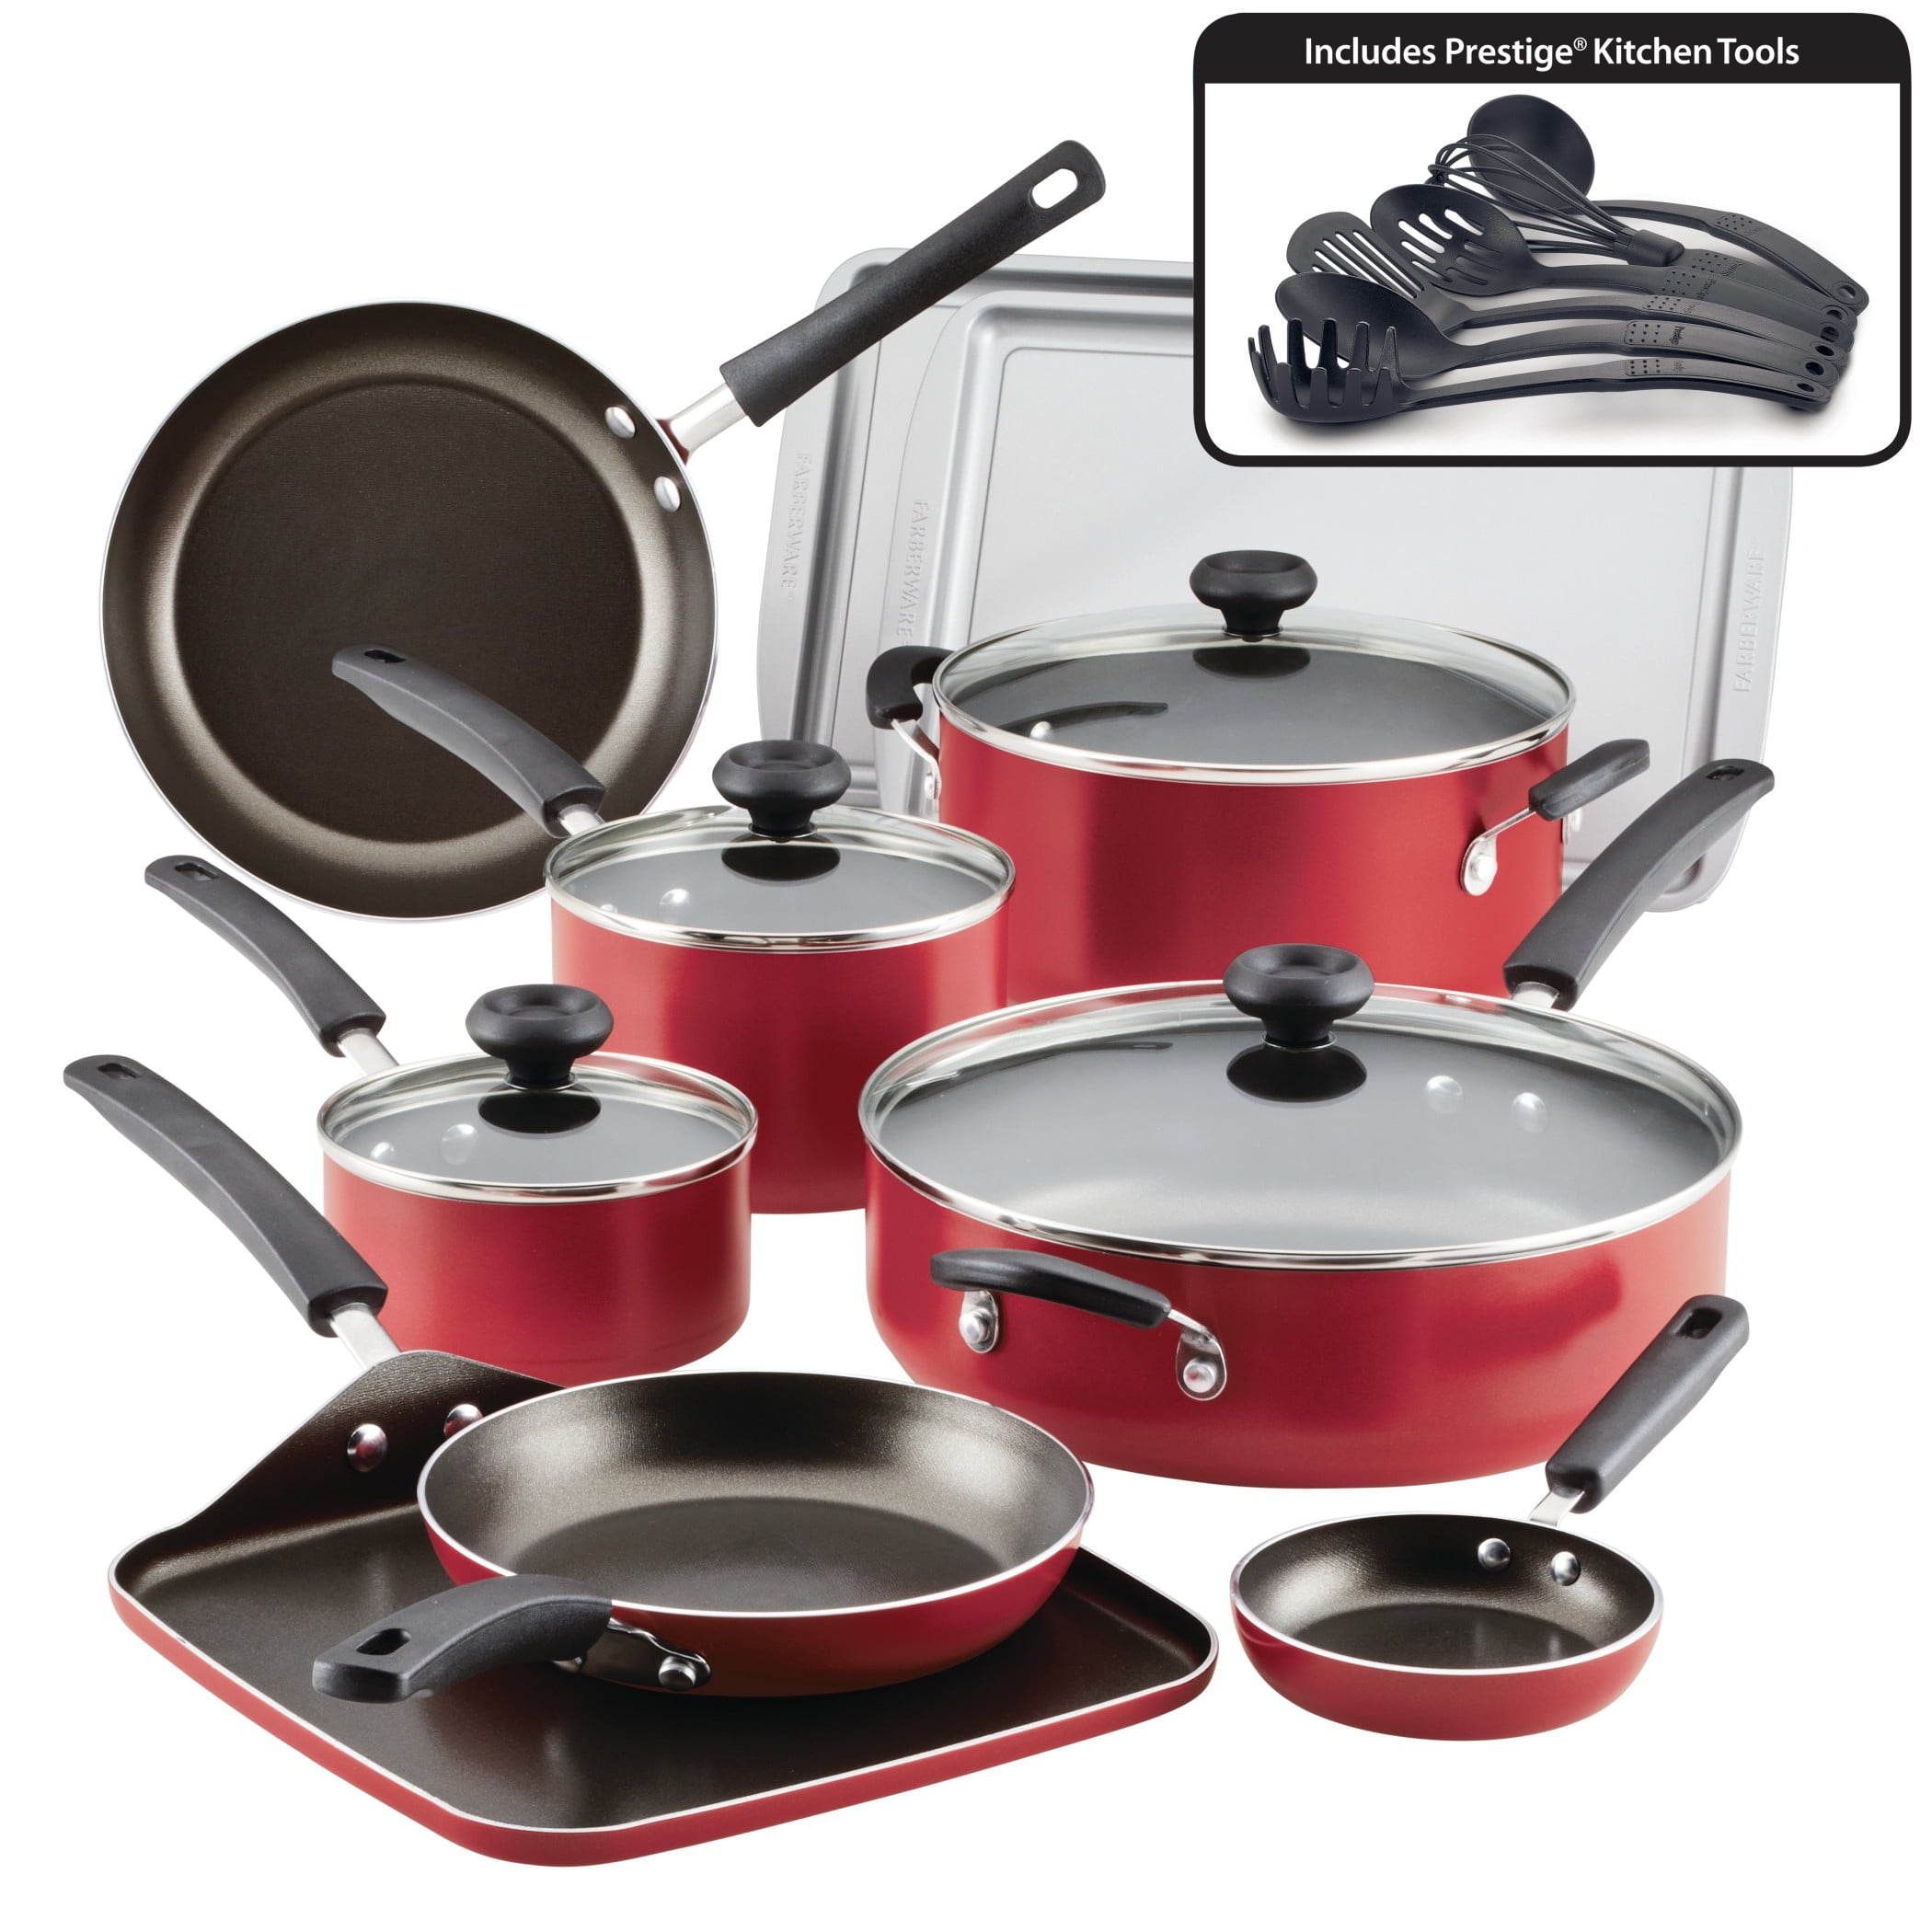 Farberware 20-Piece Easy Clean Aluminum Nonstick Cookware Pots and Pans Set,  Gray - AliExpress